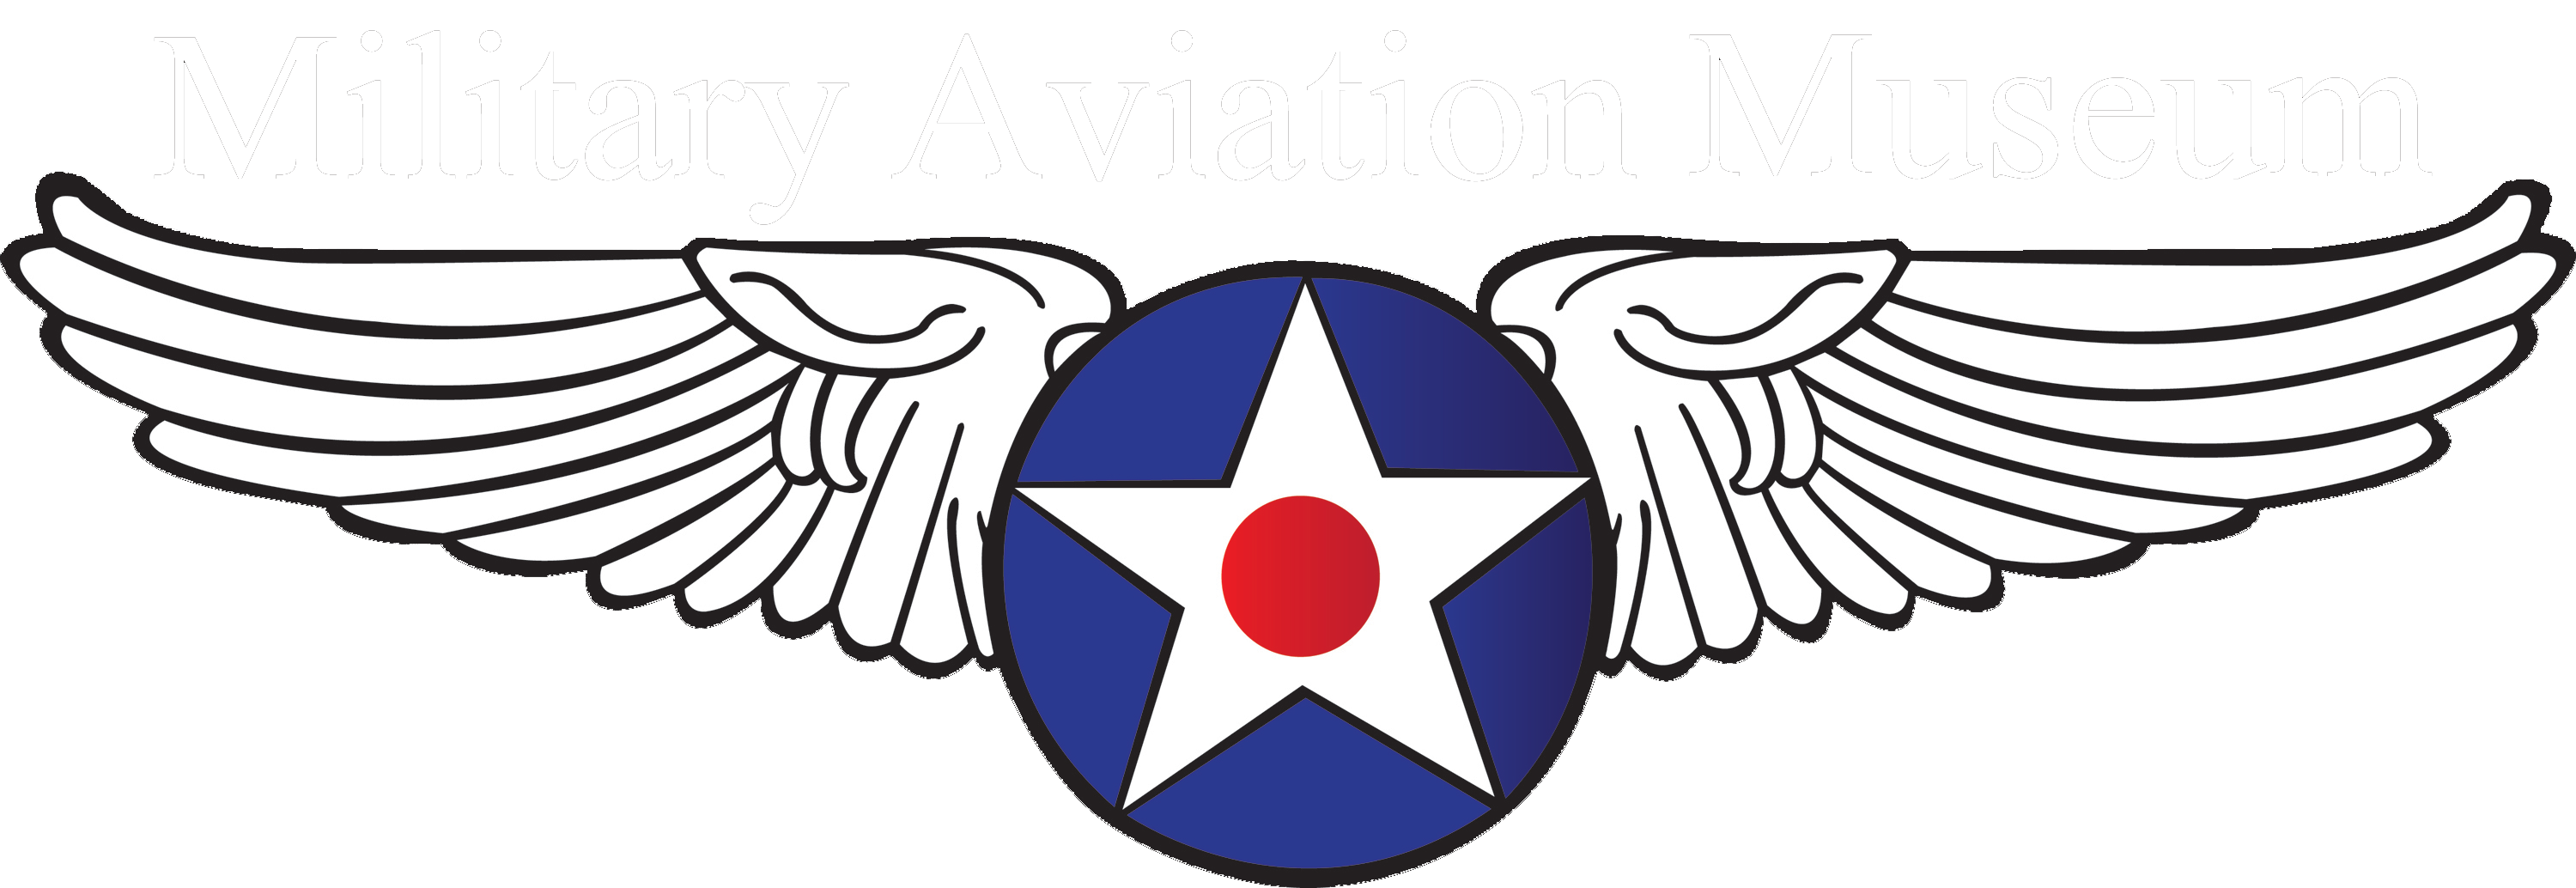 wings logo png